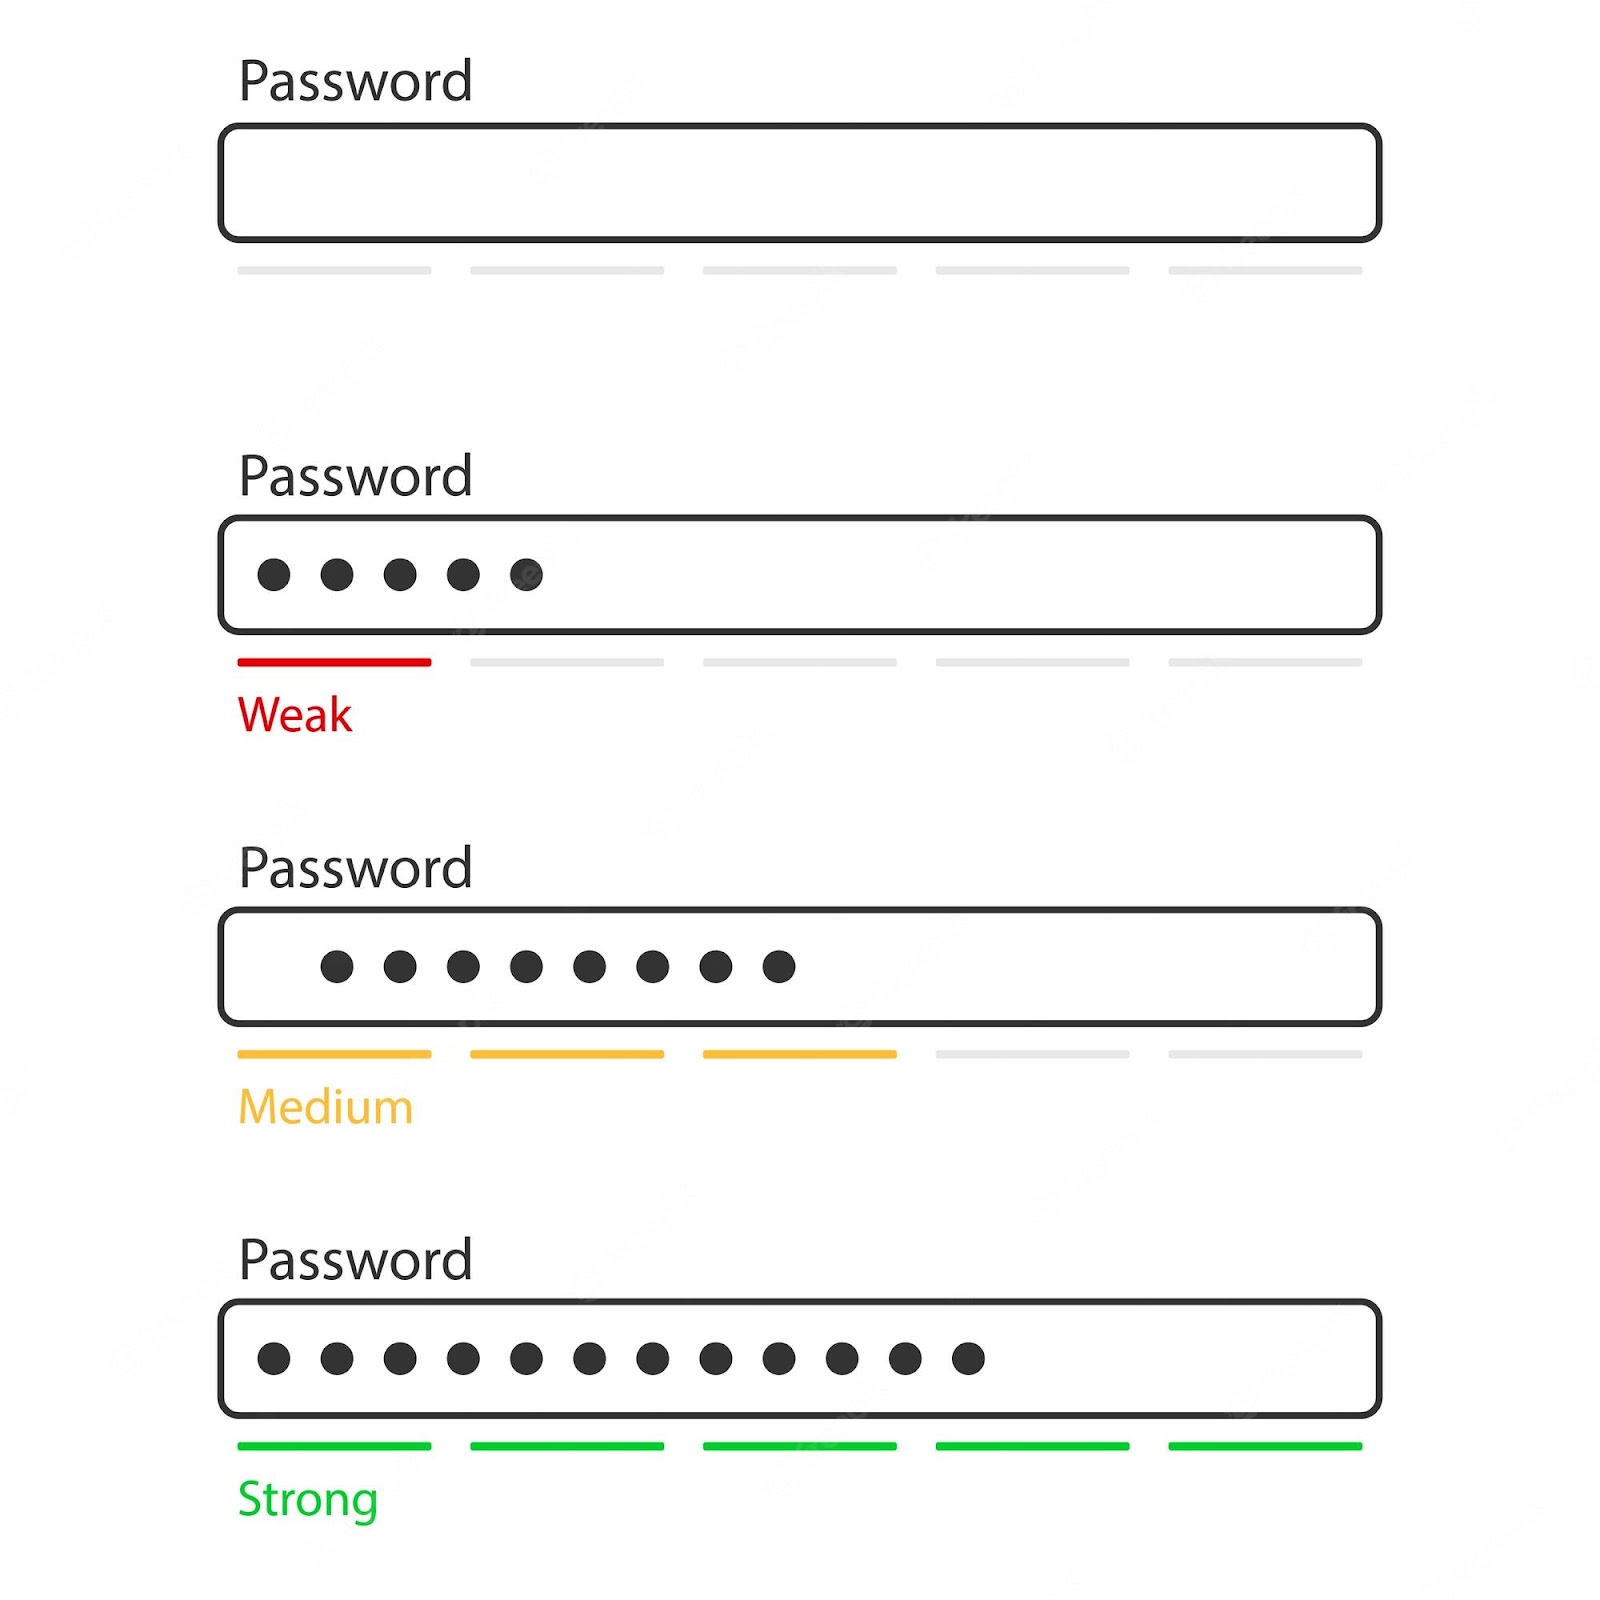 Co je to slabé heslo?